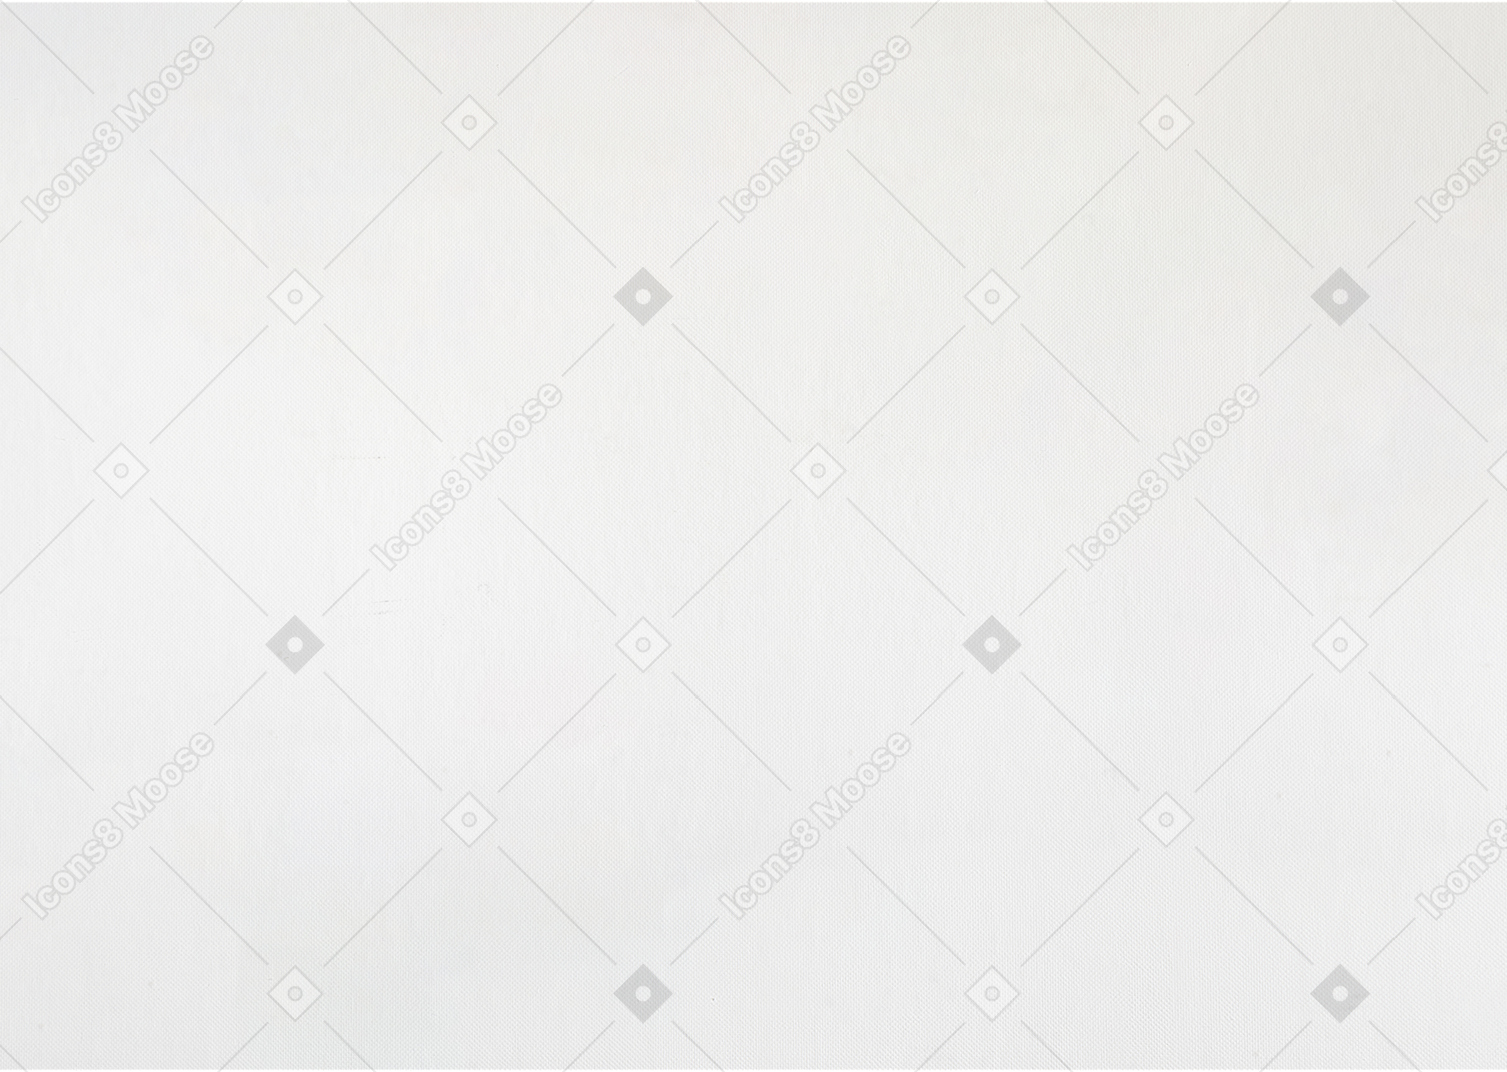 White blank background